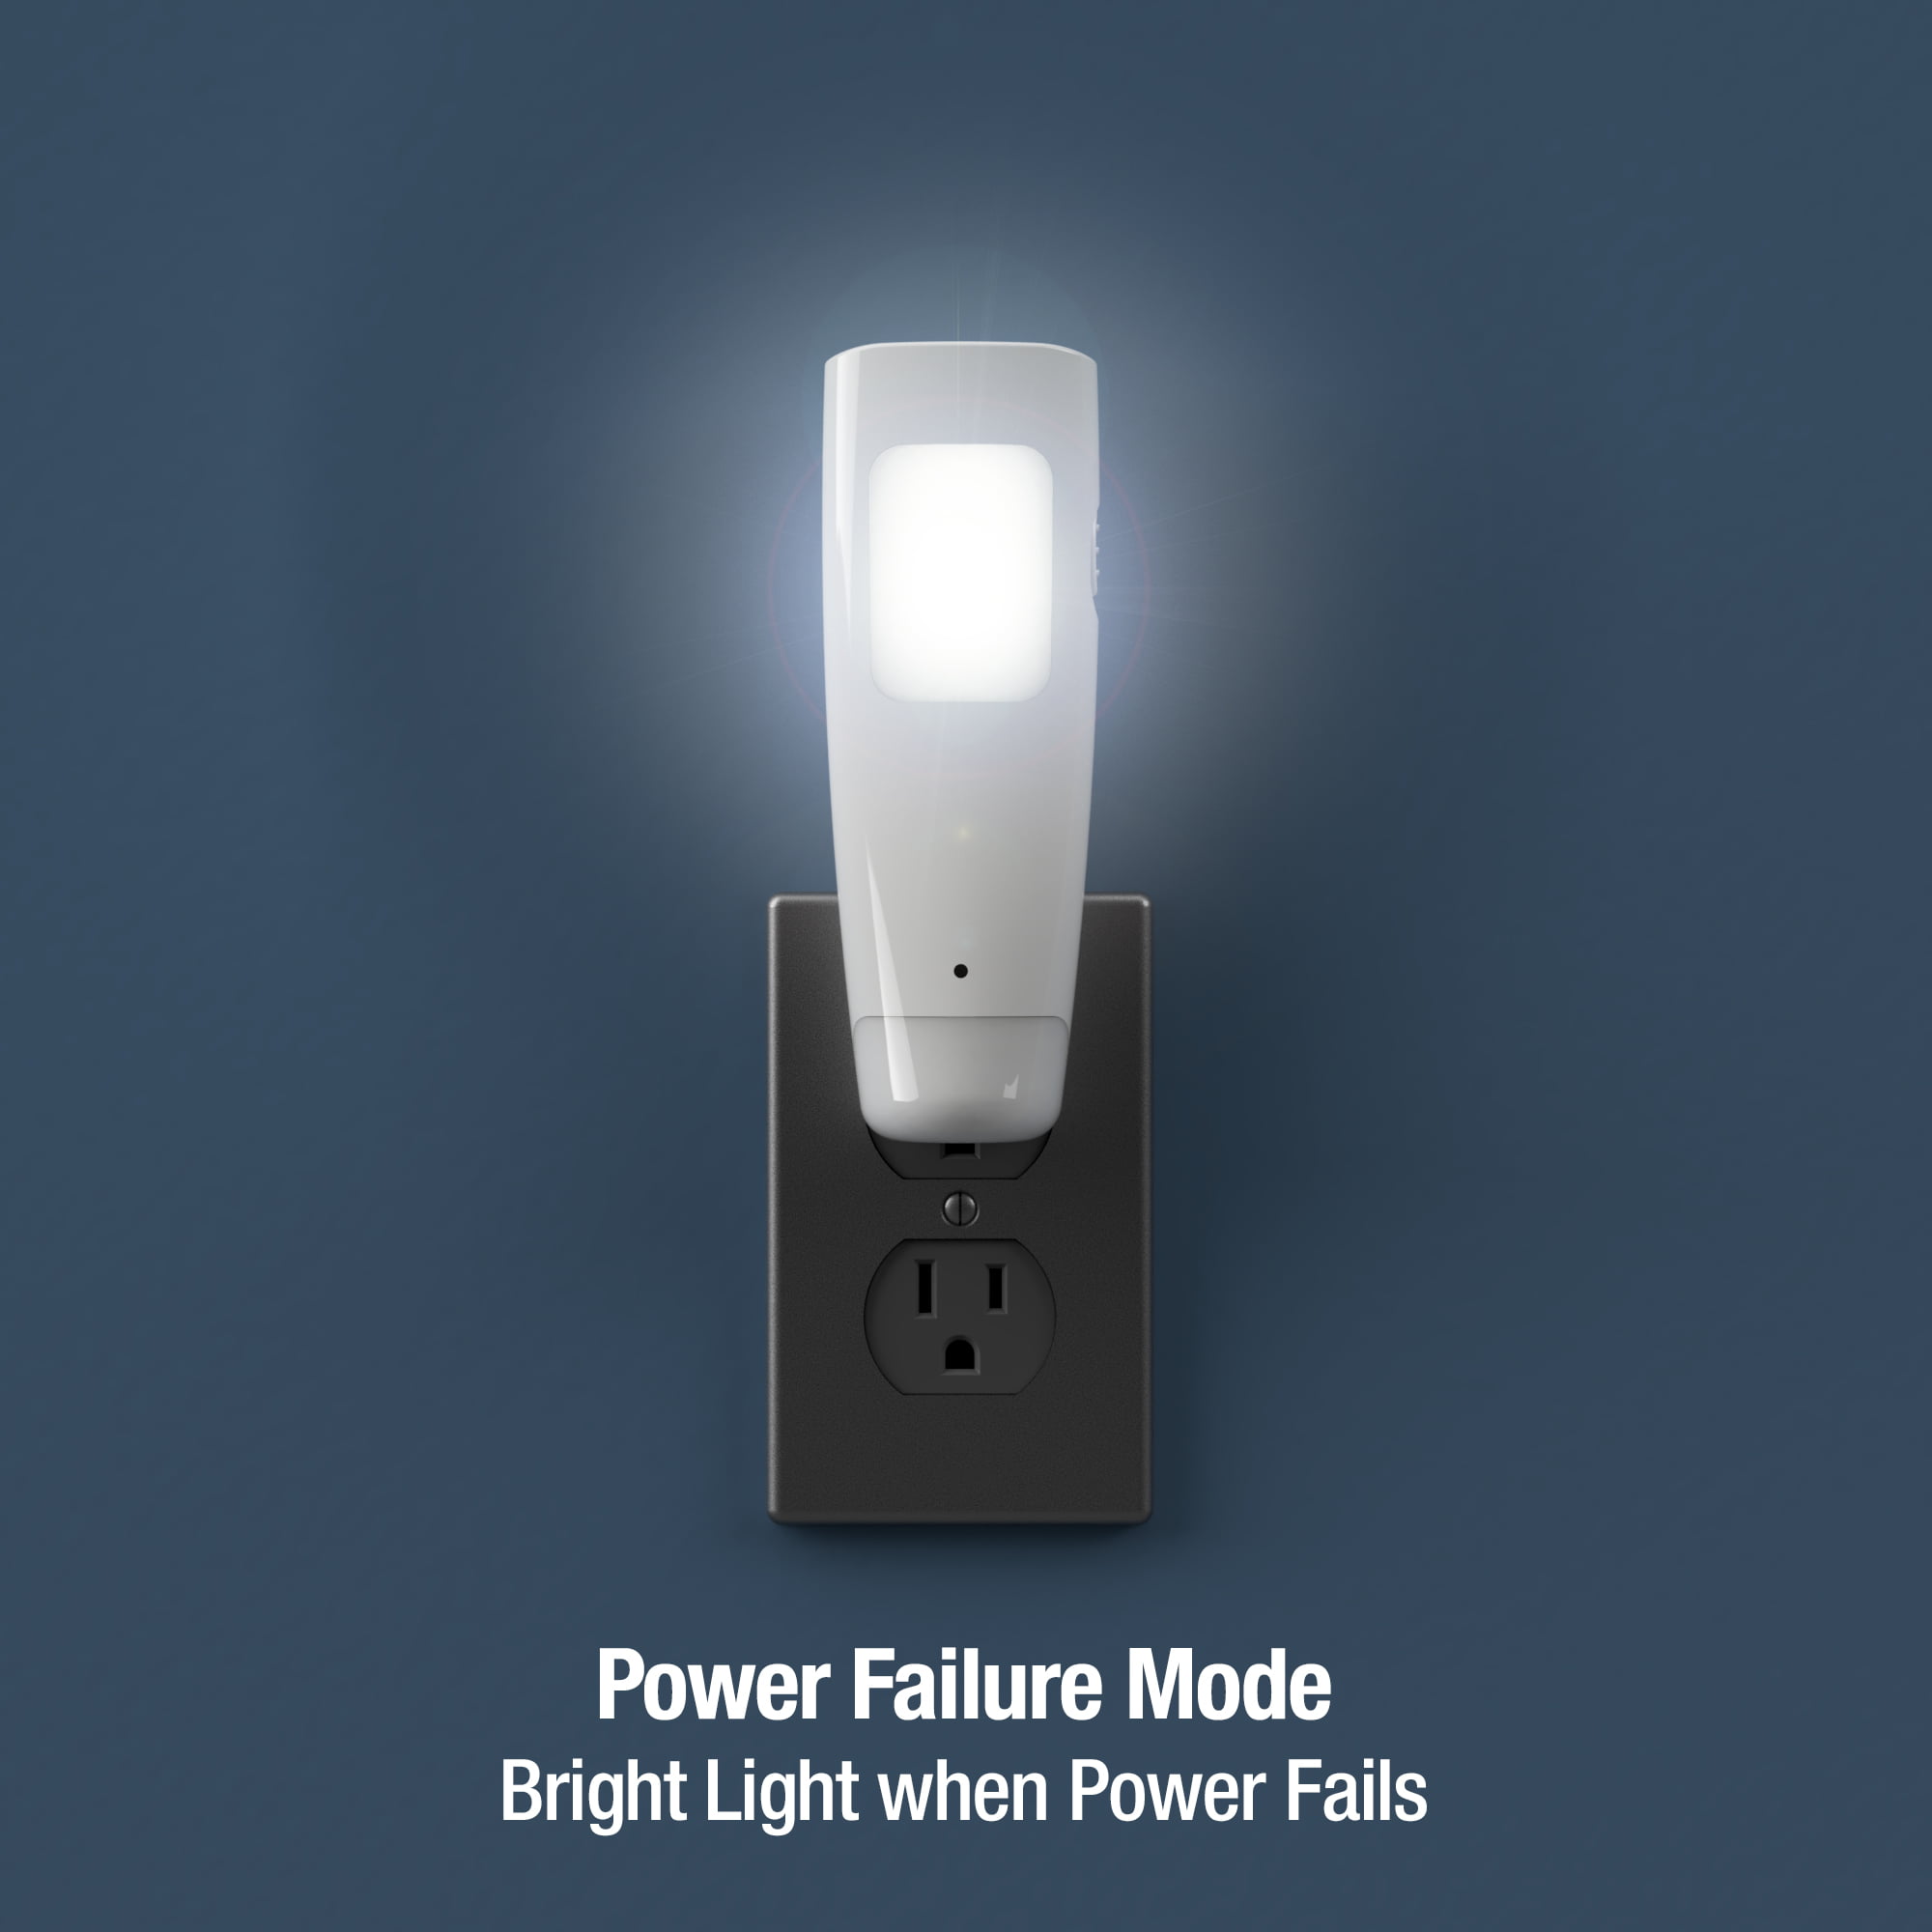 Westek LED Emergency Lights for Home Power Failure, 6 Pack - 3 Functio —  CHIMIYA